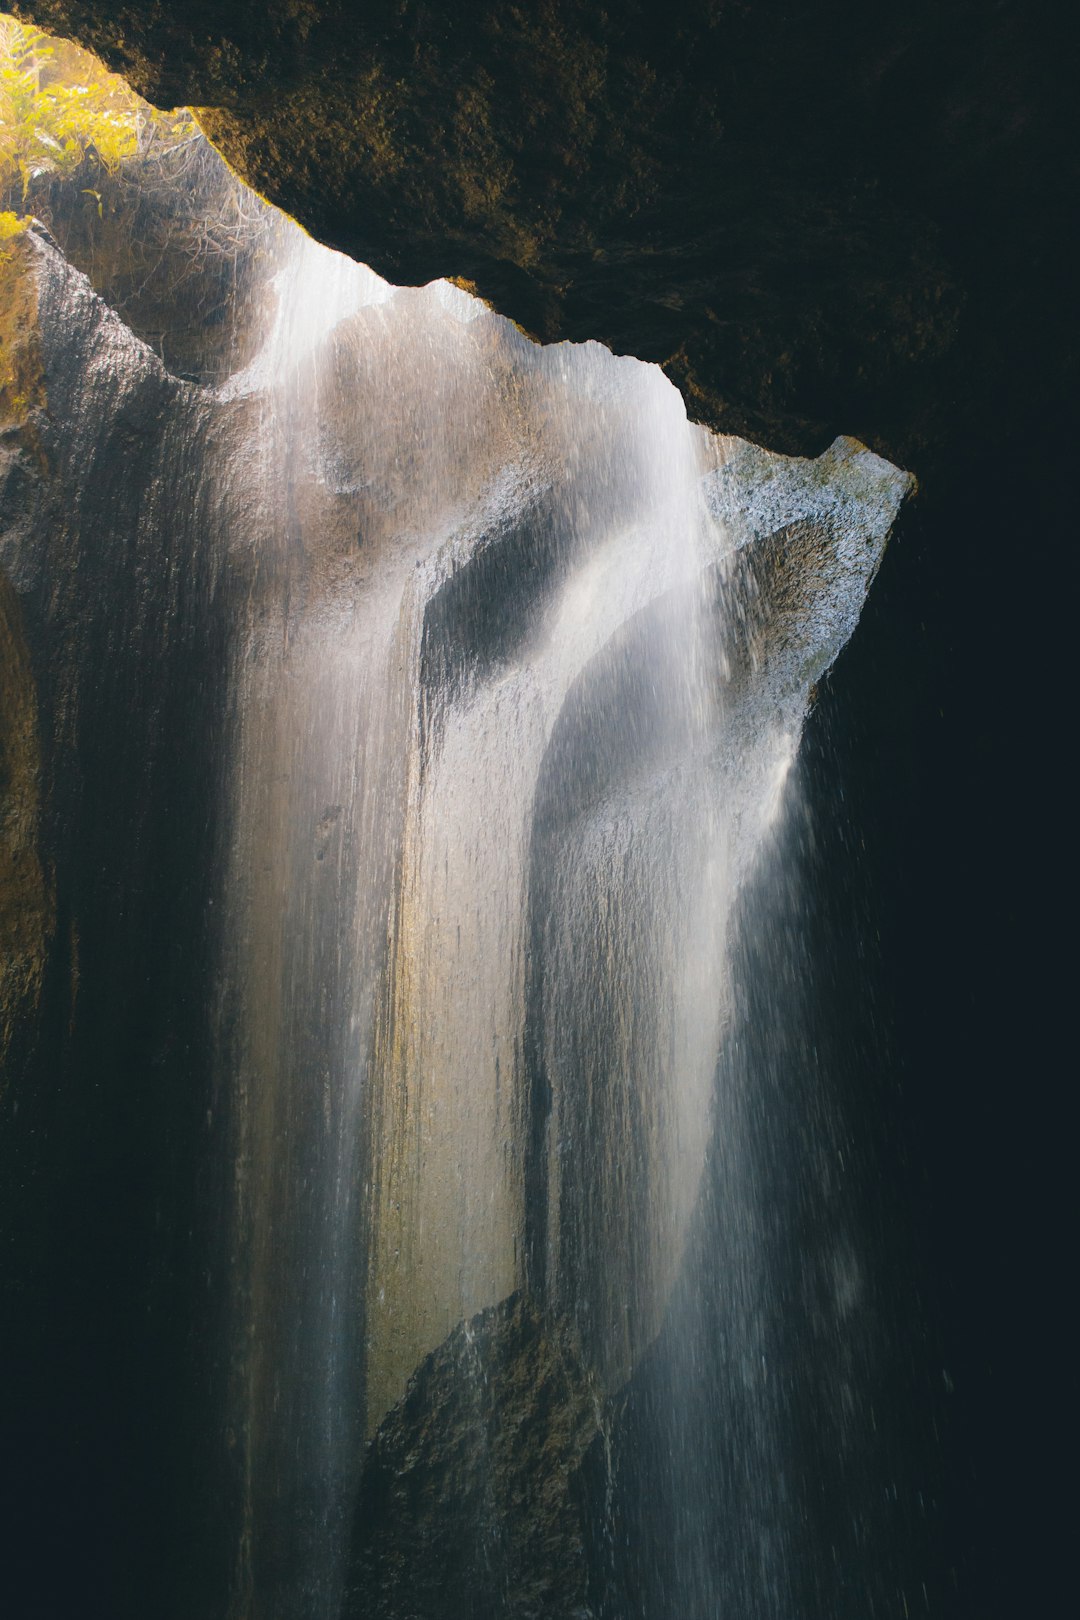 water falls in black cave